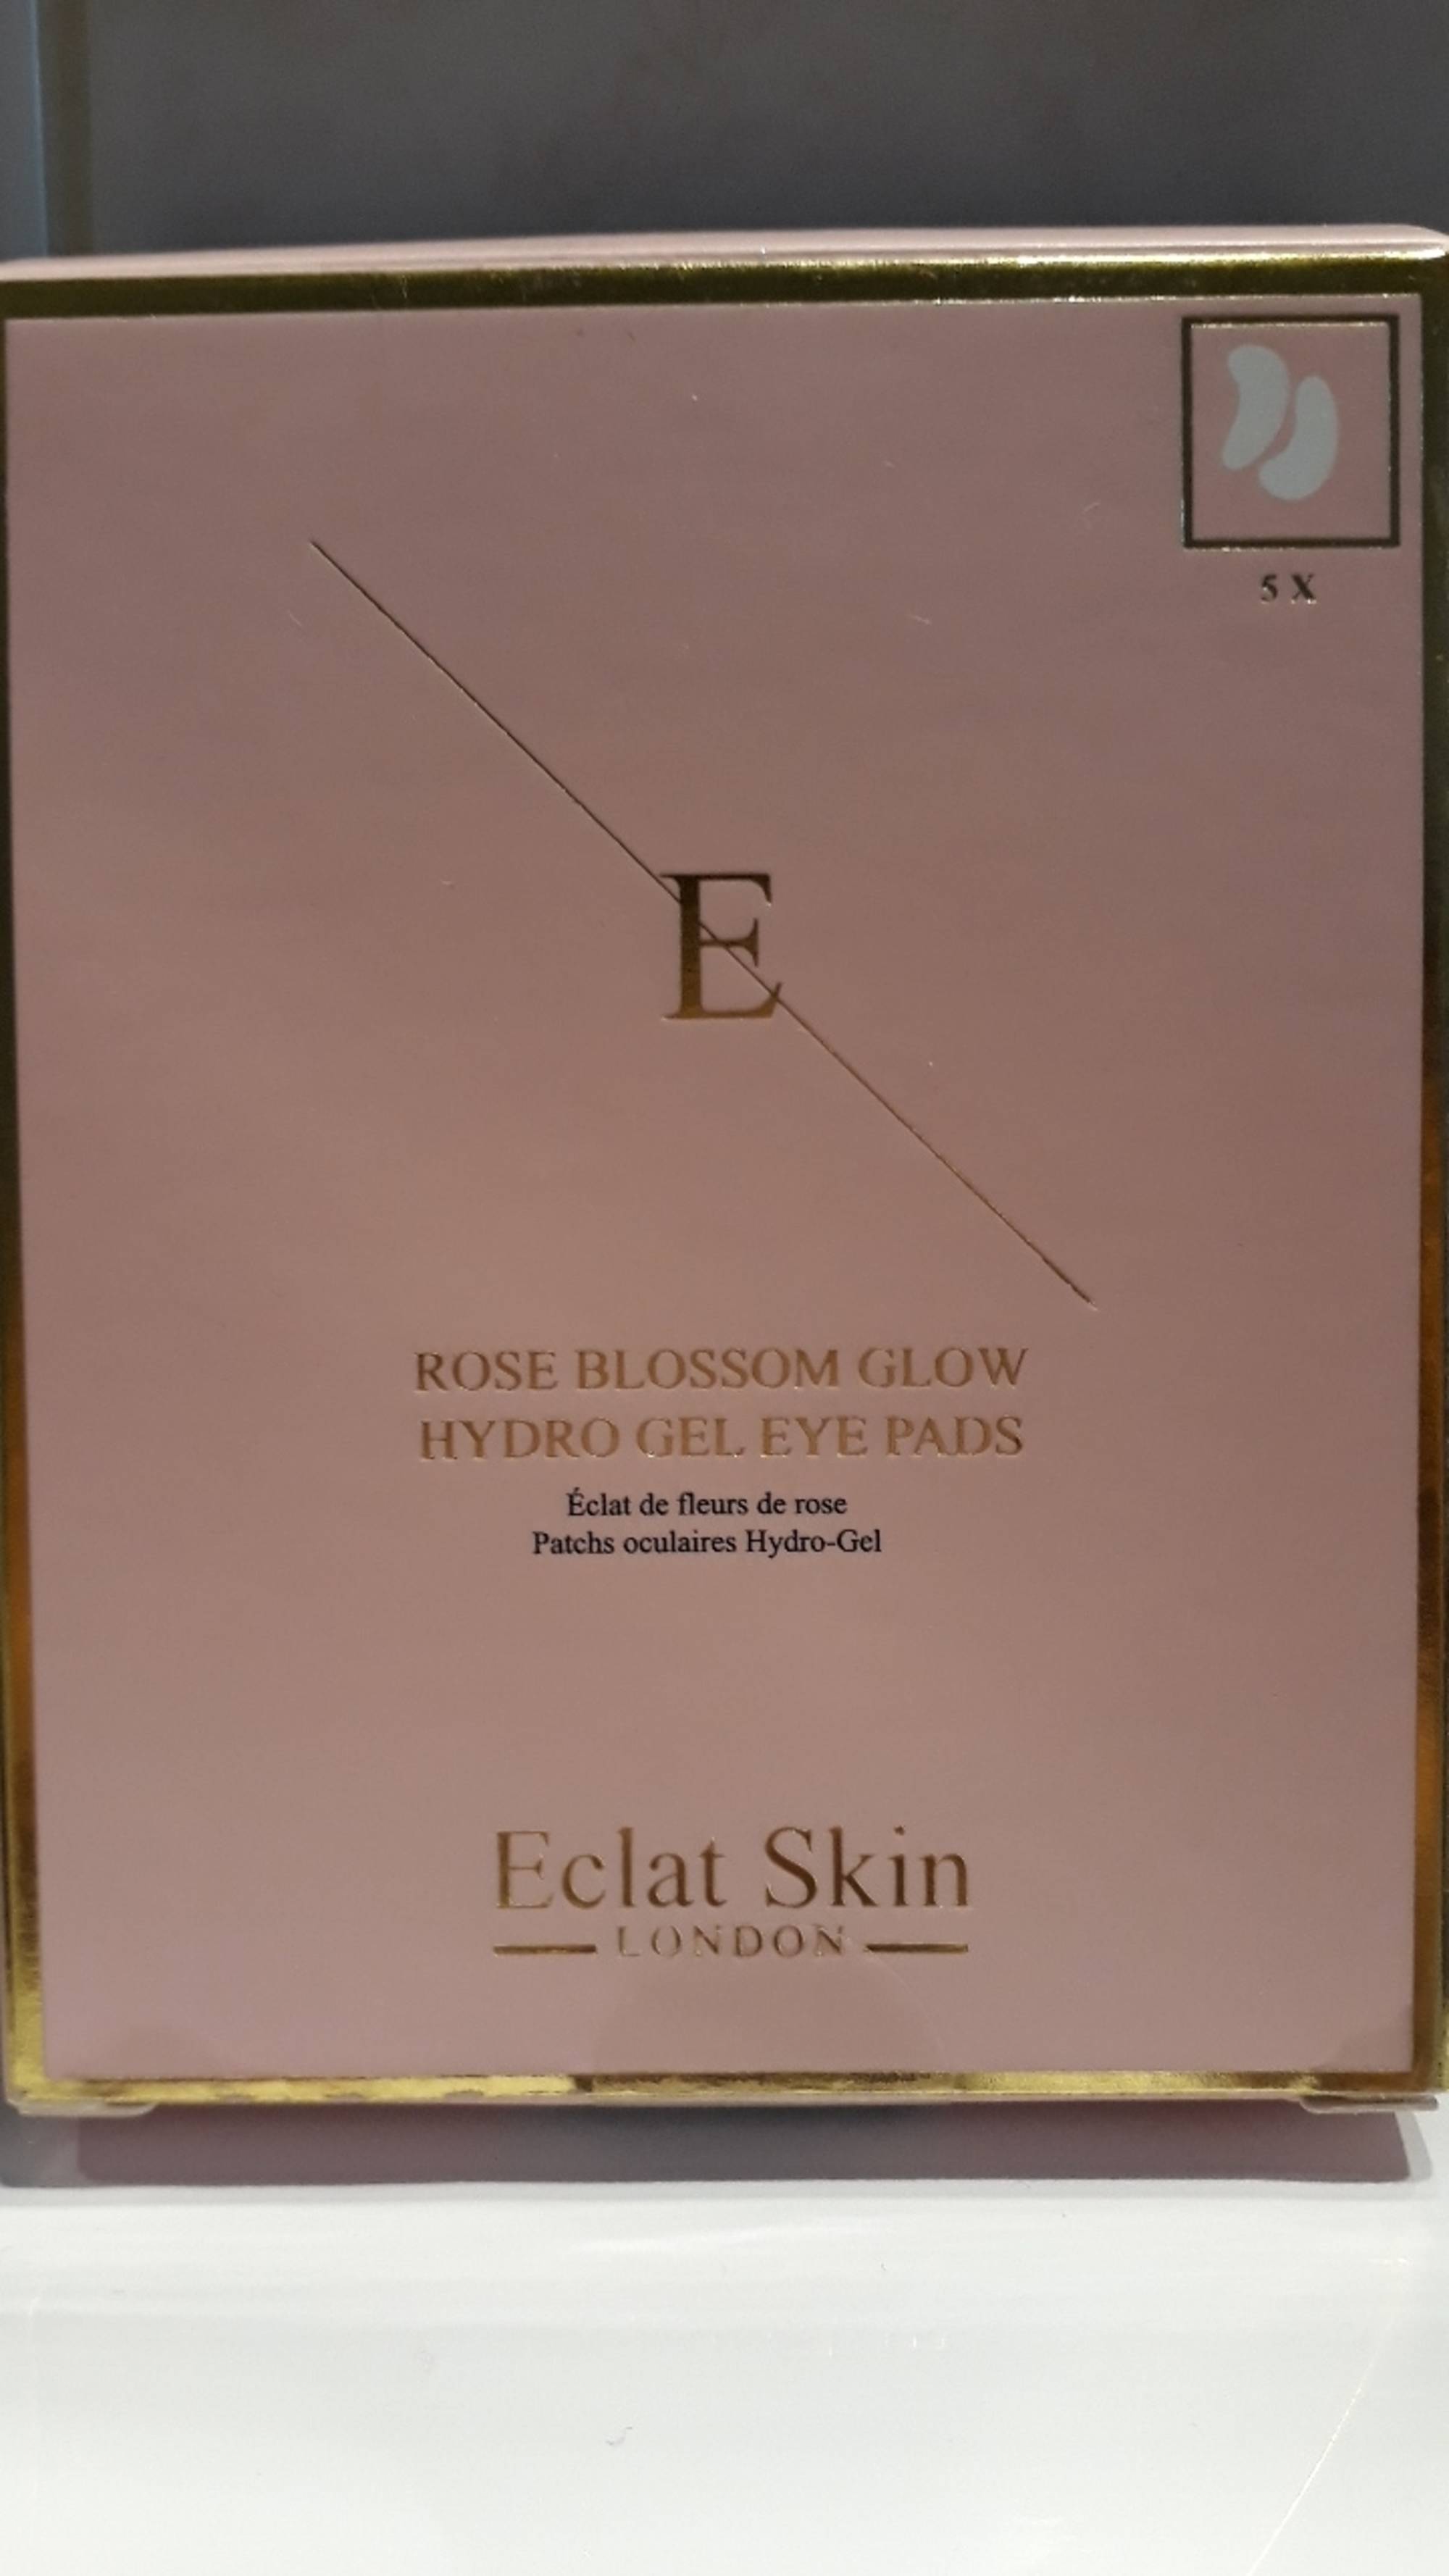 ECLAT SKIN - Éclat de fleurs de rose - Patchs oculaires Hydro-Gel